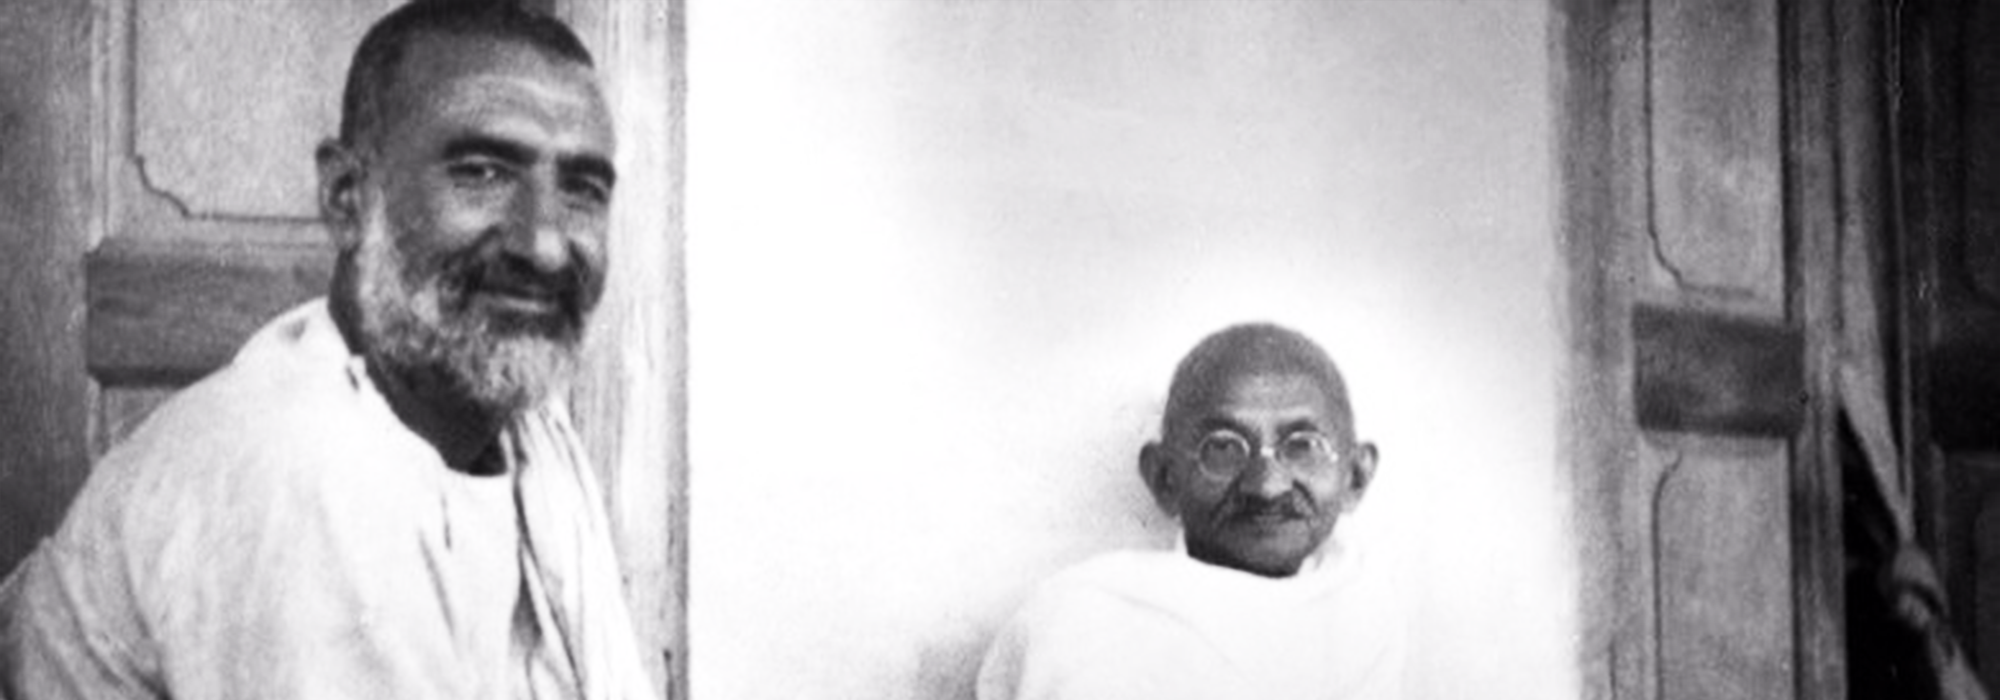 Gandhi Iconic Relationships image 1